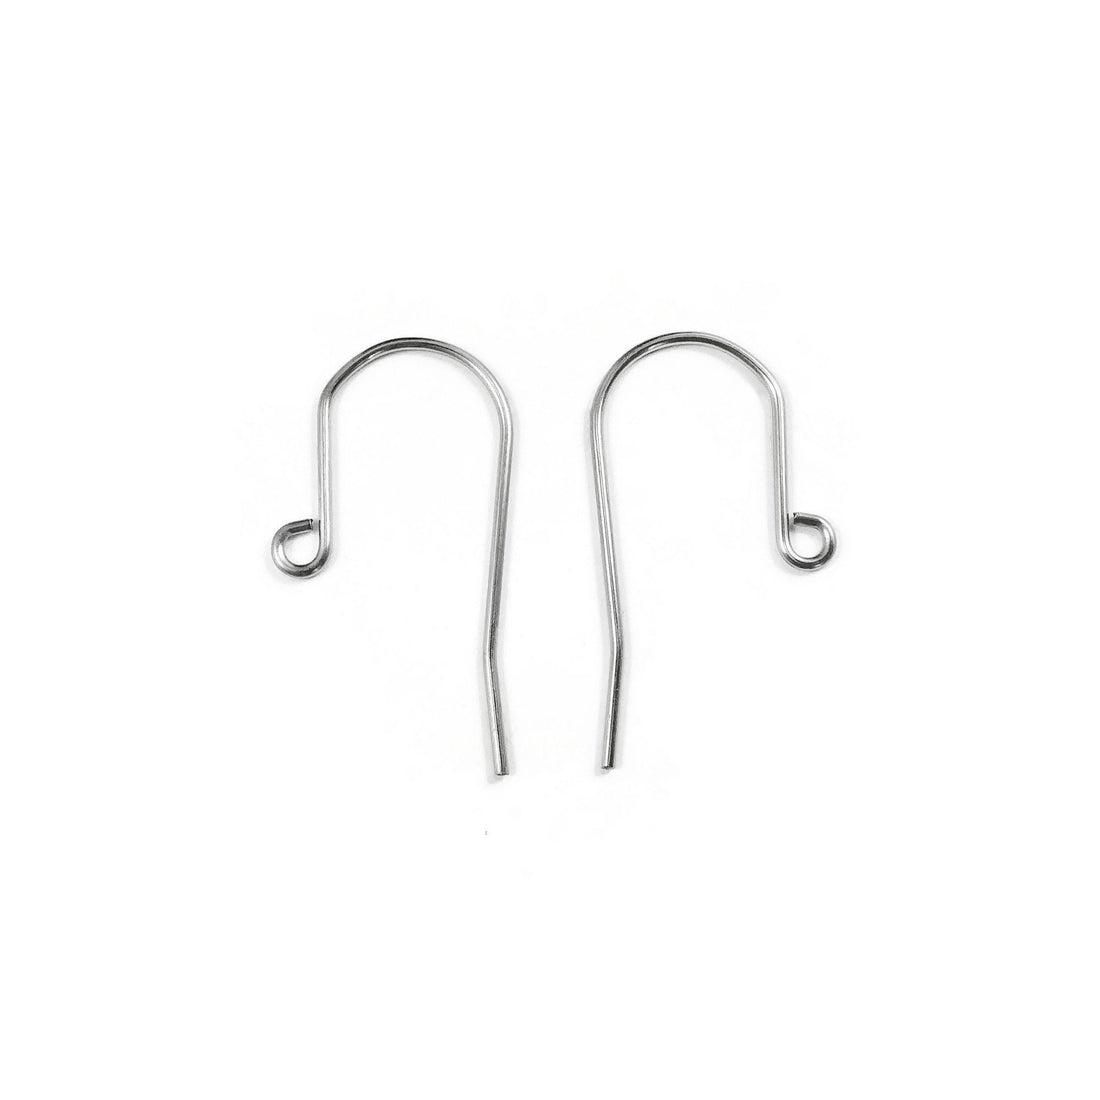 Surgical stainless steel hooks, Minimalist earring findings, Hypoallergenic silver earwire, Jewelry making